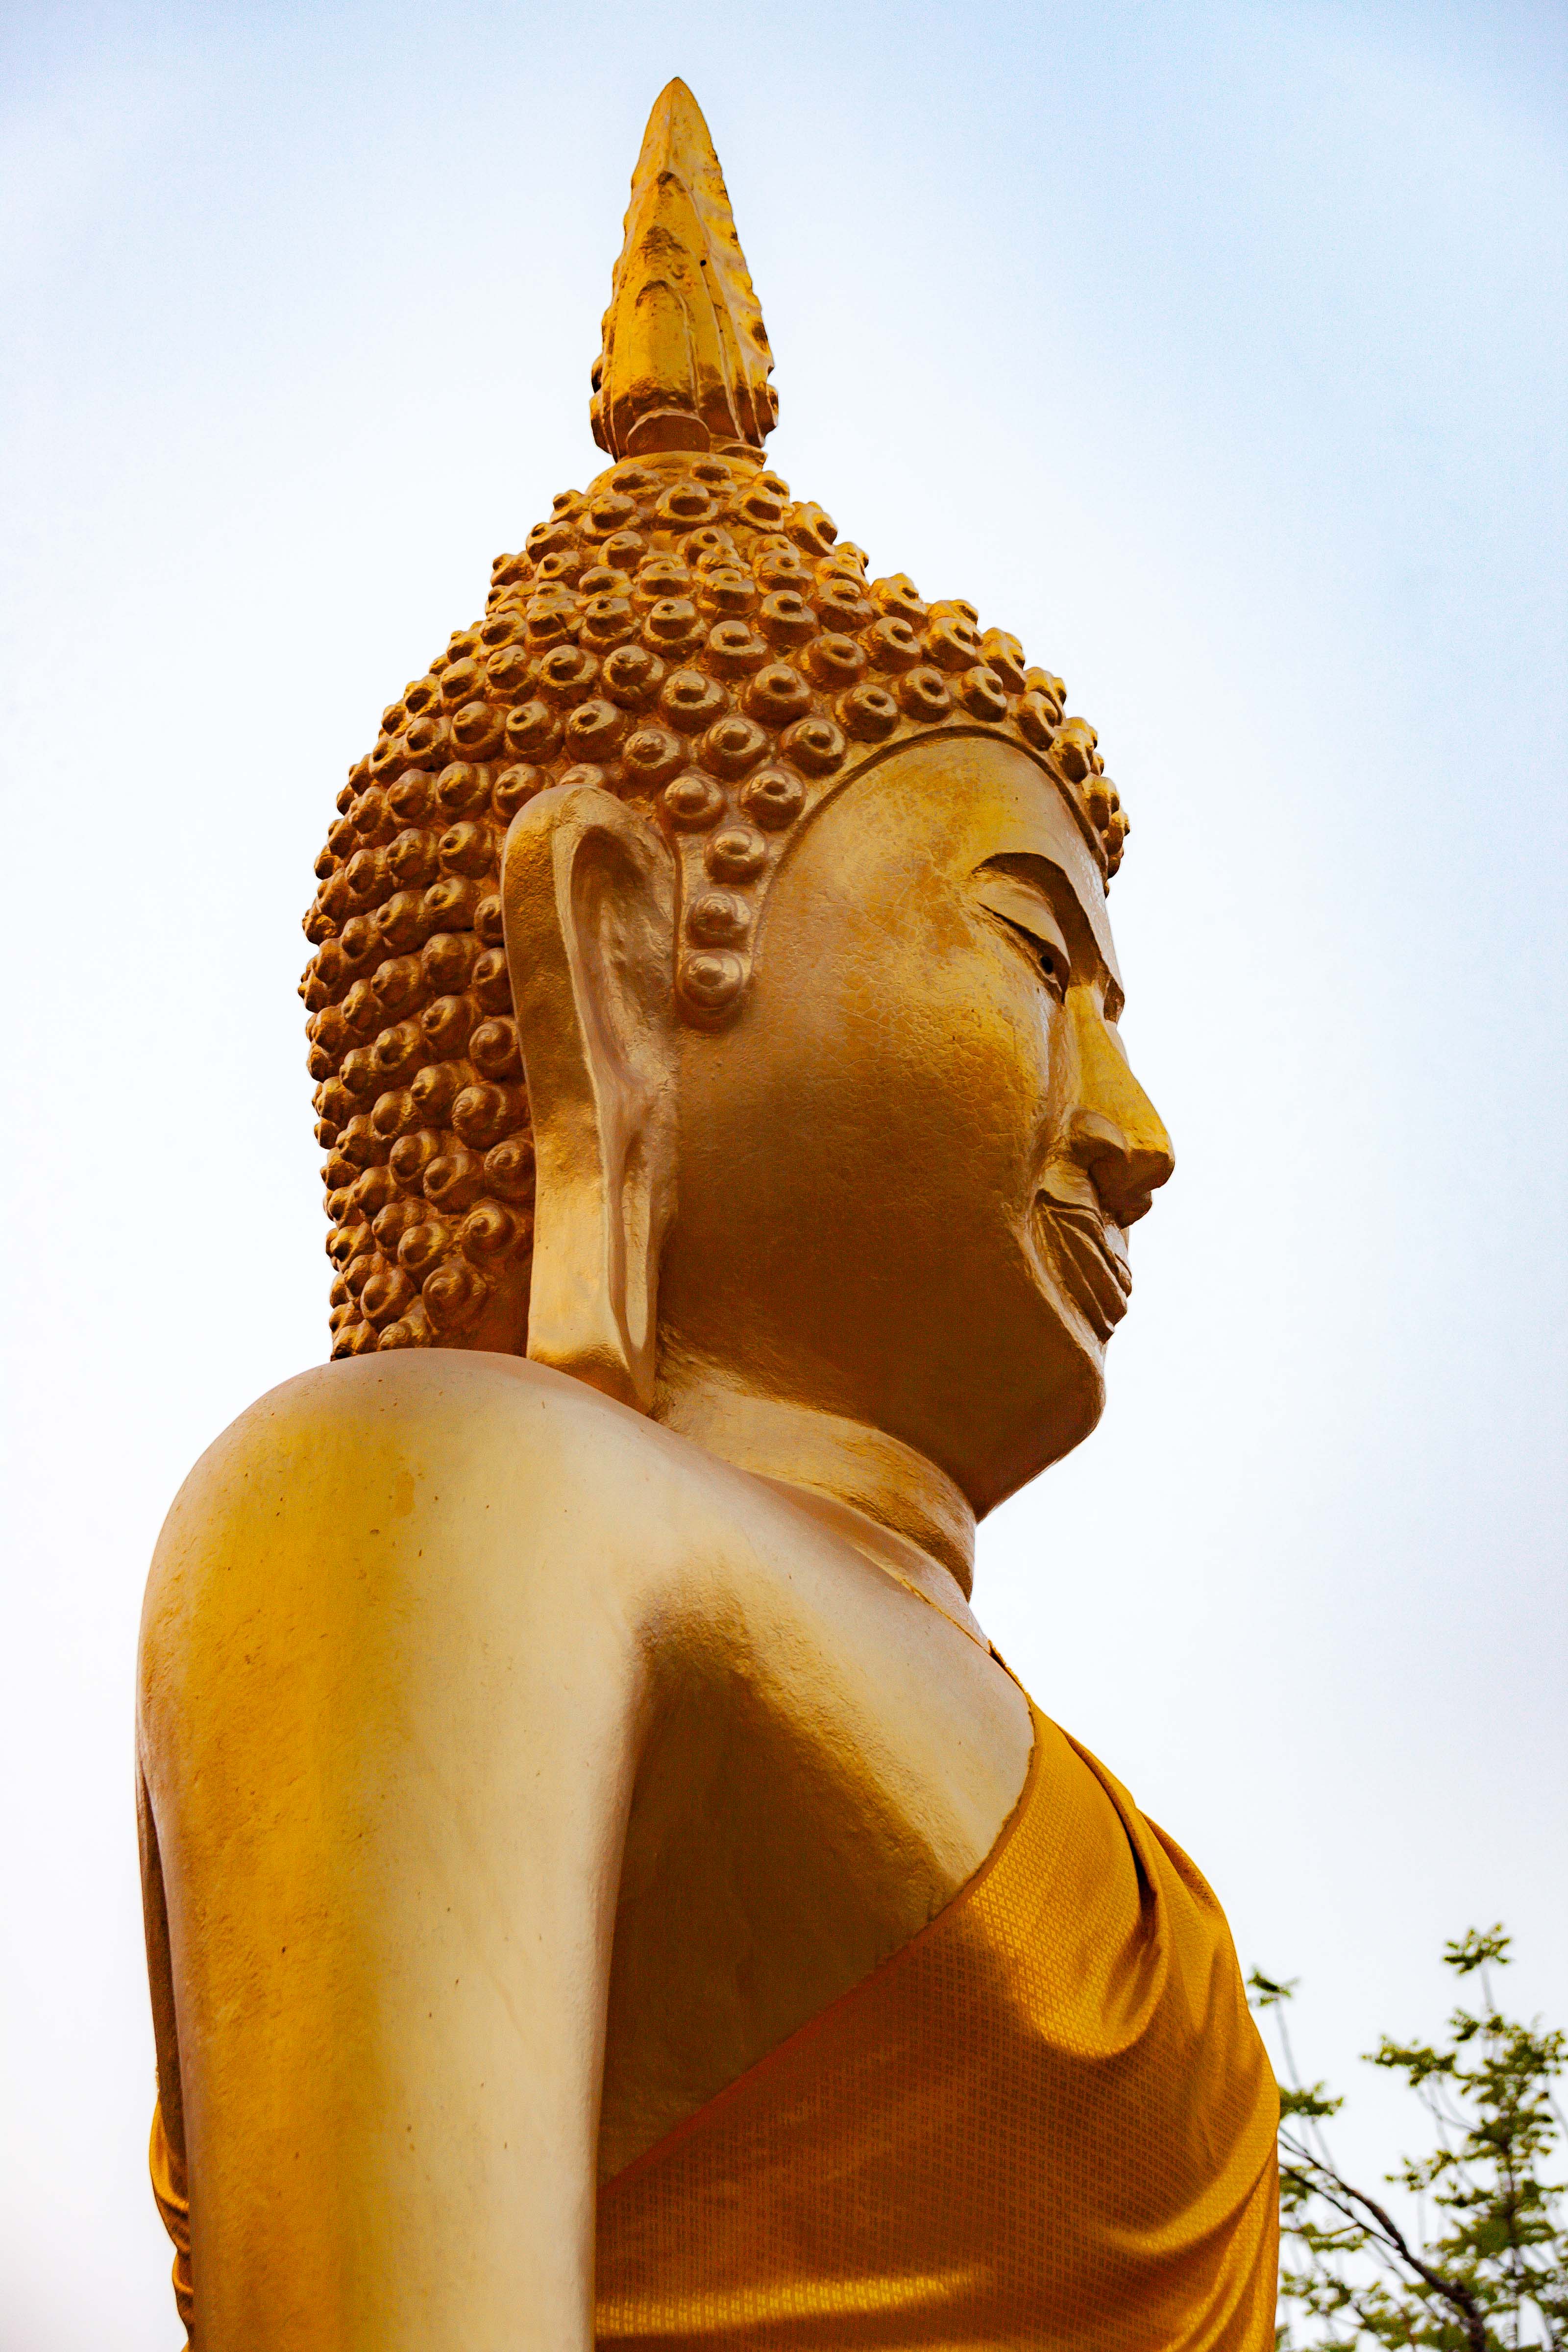 Thailand, Nakhon Ratchasima Prov, Buddha, 2008, IMG 0764